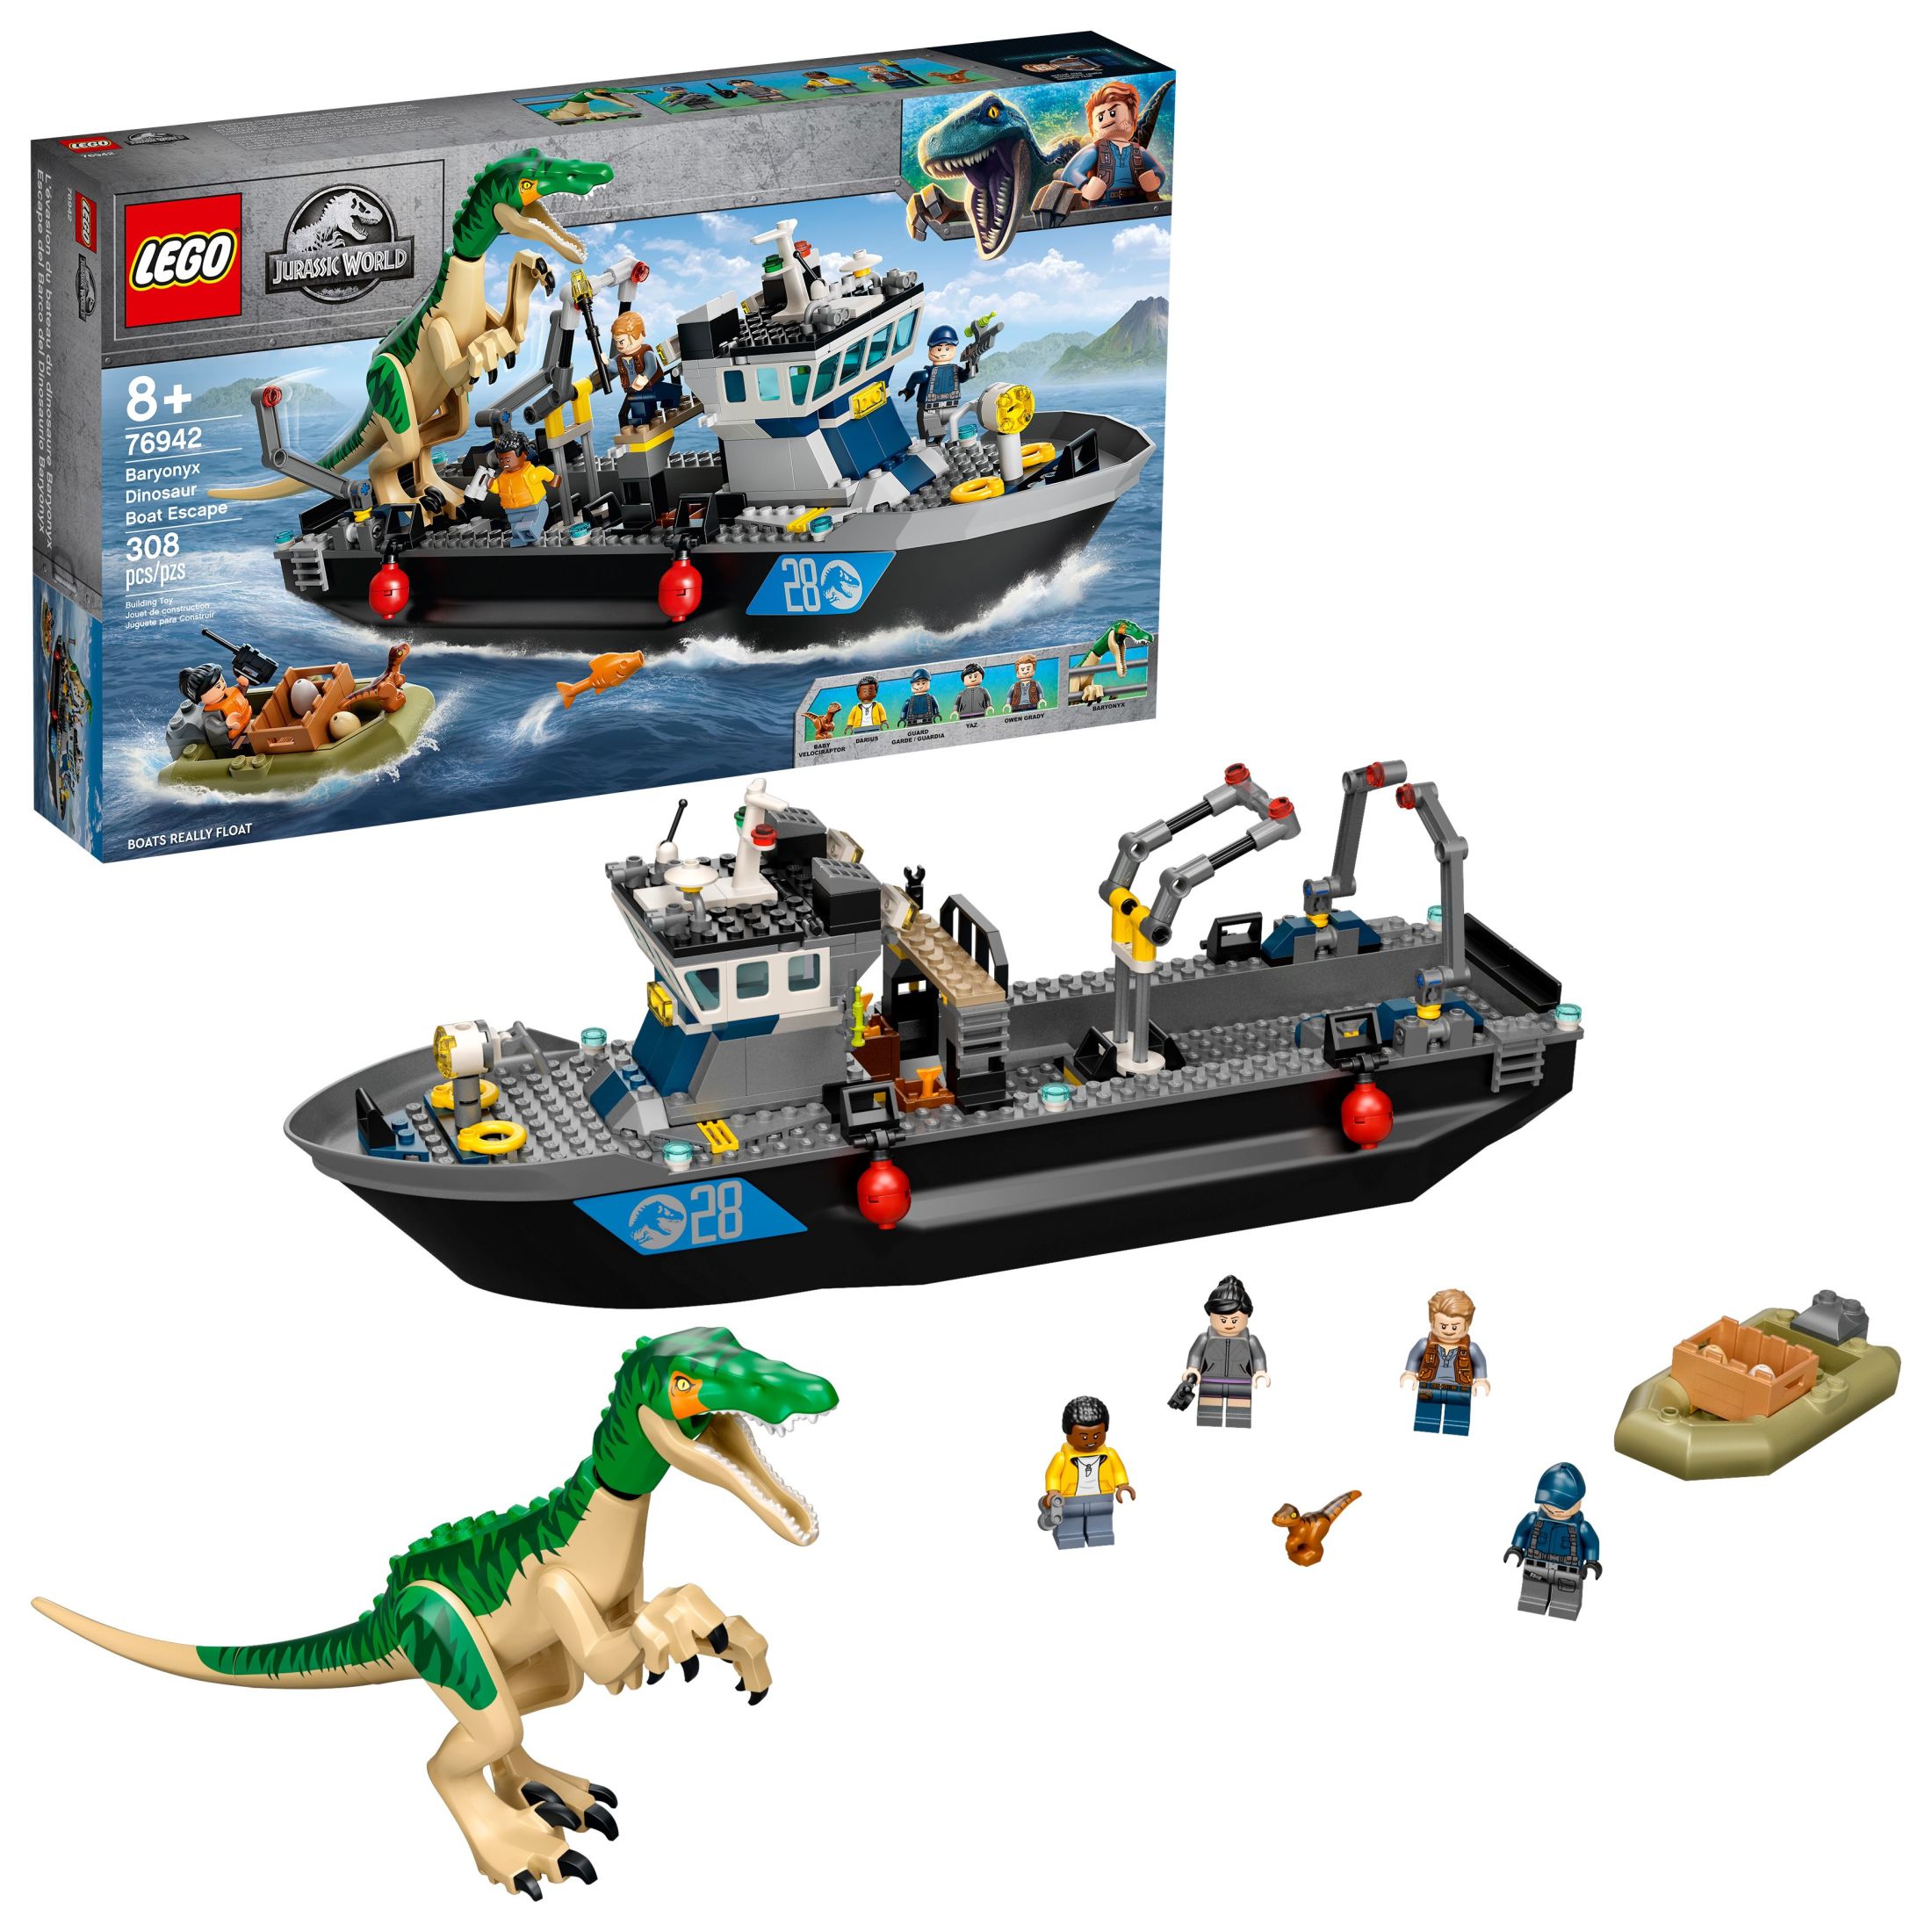 LEGO Jurassic World Baryonyx Dinosaur Boat Escape 76942 Building Toy Playset (308 Pieces) - image 1 of 8